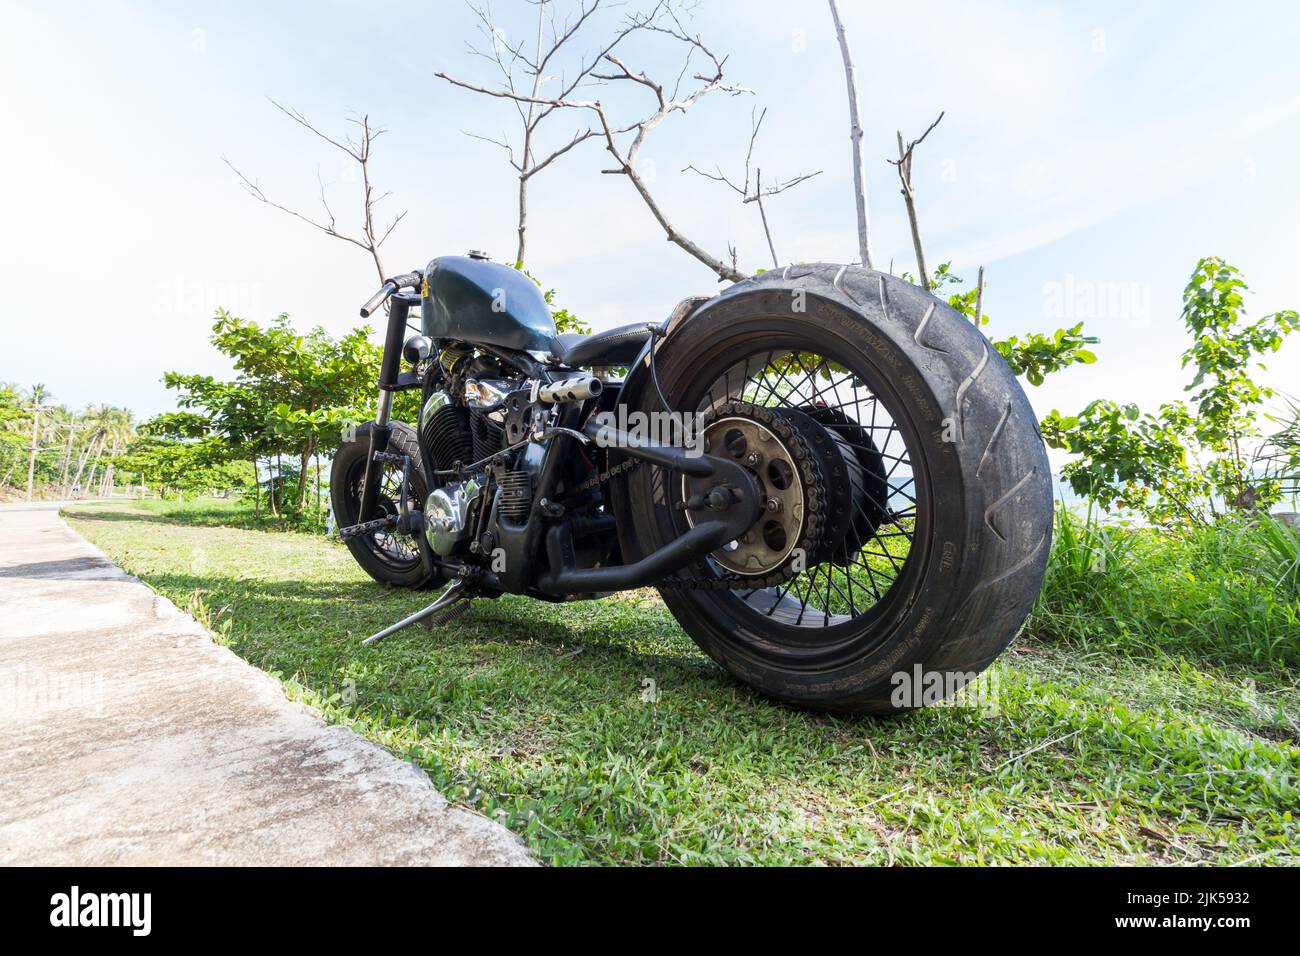 A custom chopper motorbike parked on grass next to a tropical beach. Rat bike, low rider, Honda engine Stock Photo